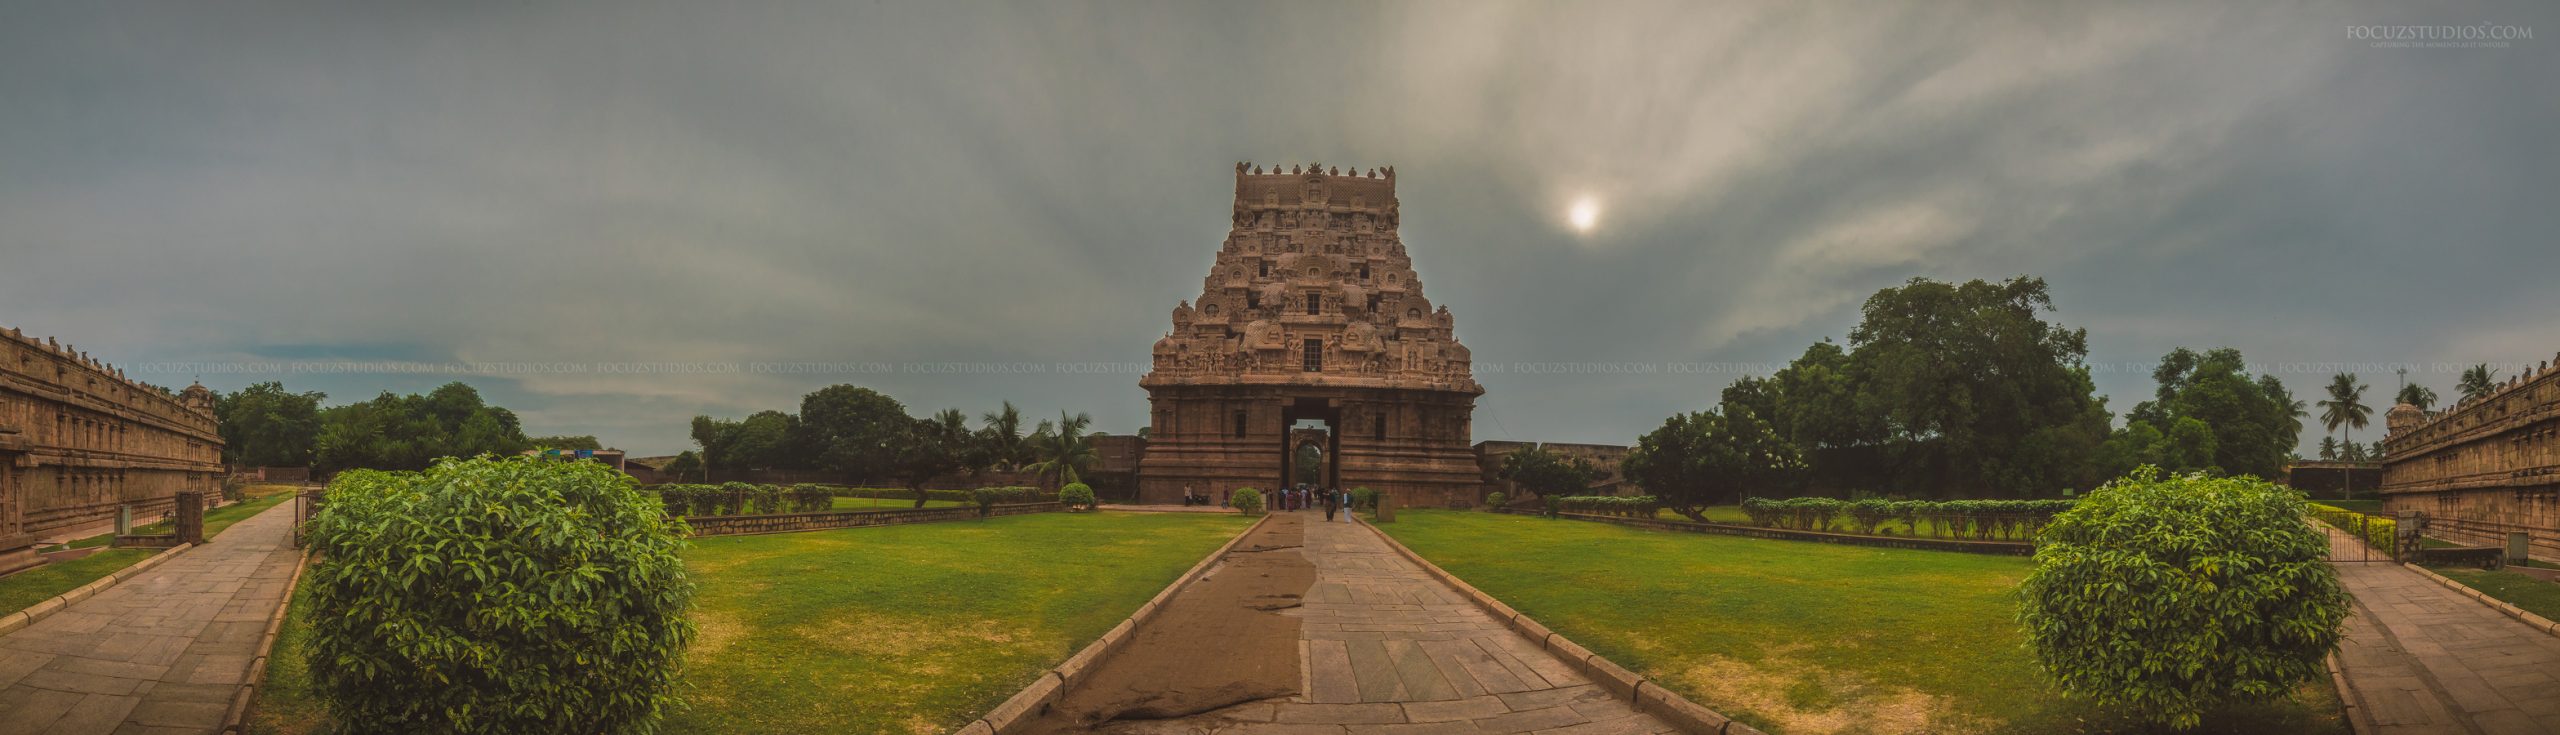 thanjavur temple photo panorama